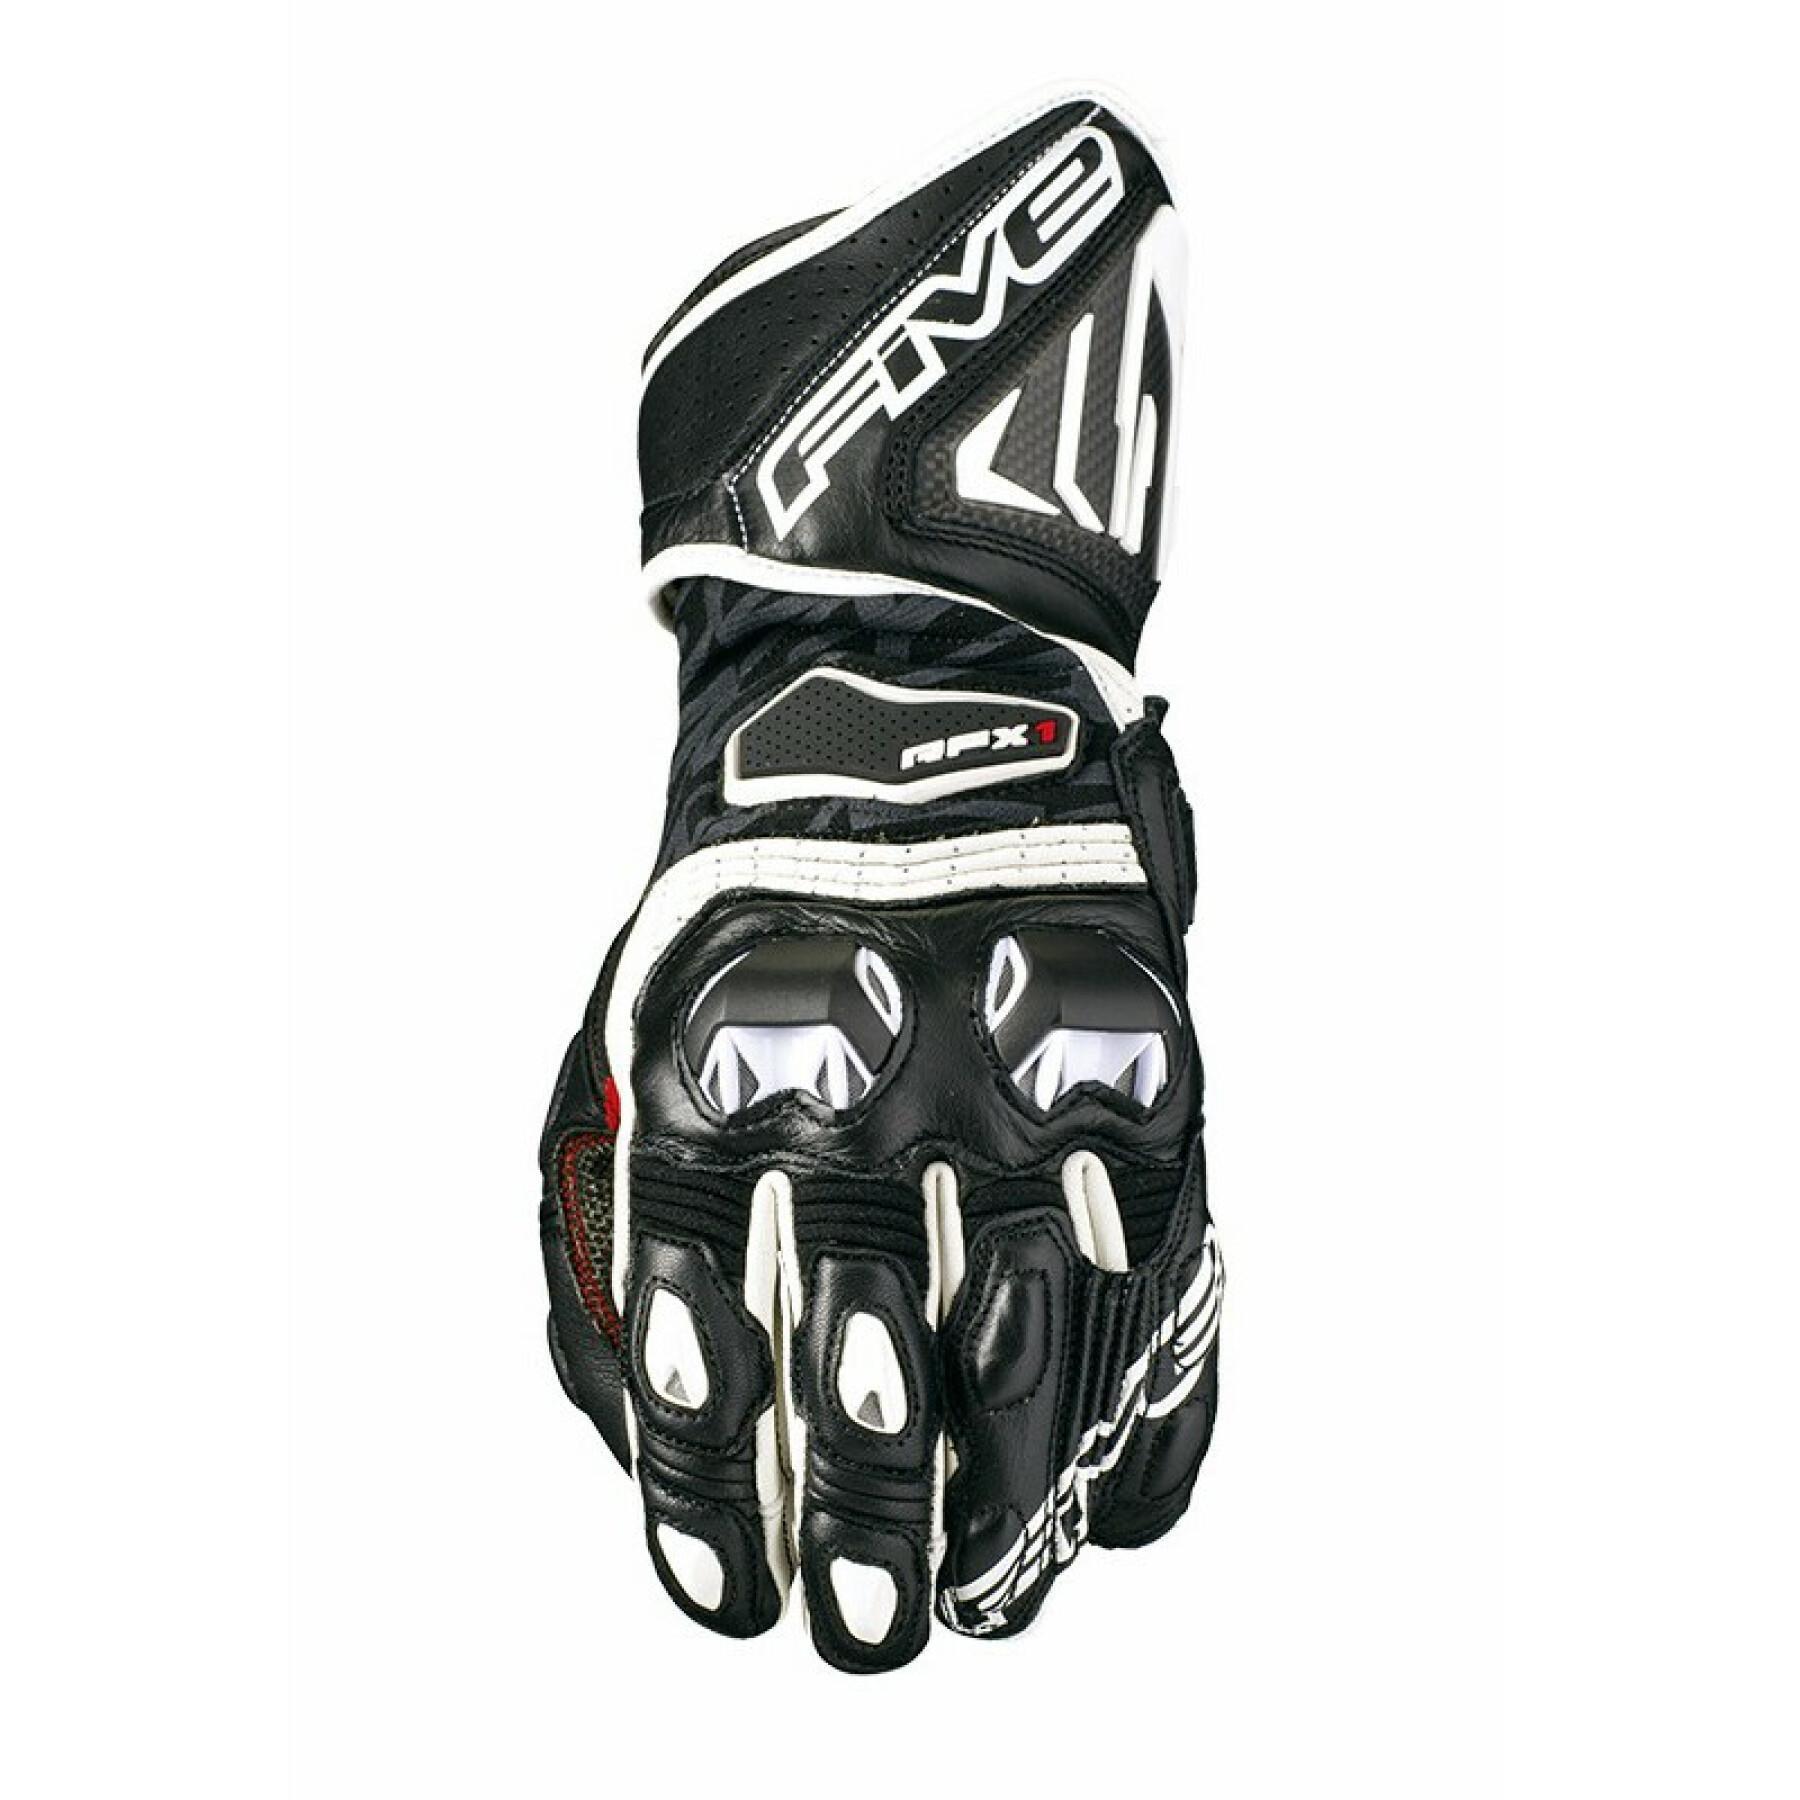 Women's mid-season motorcycle gloves Five RFX1 2016